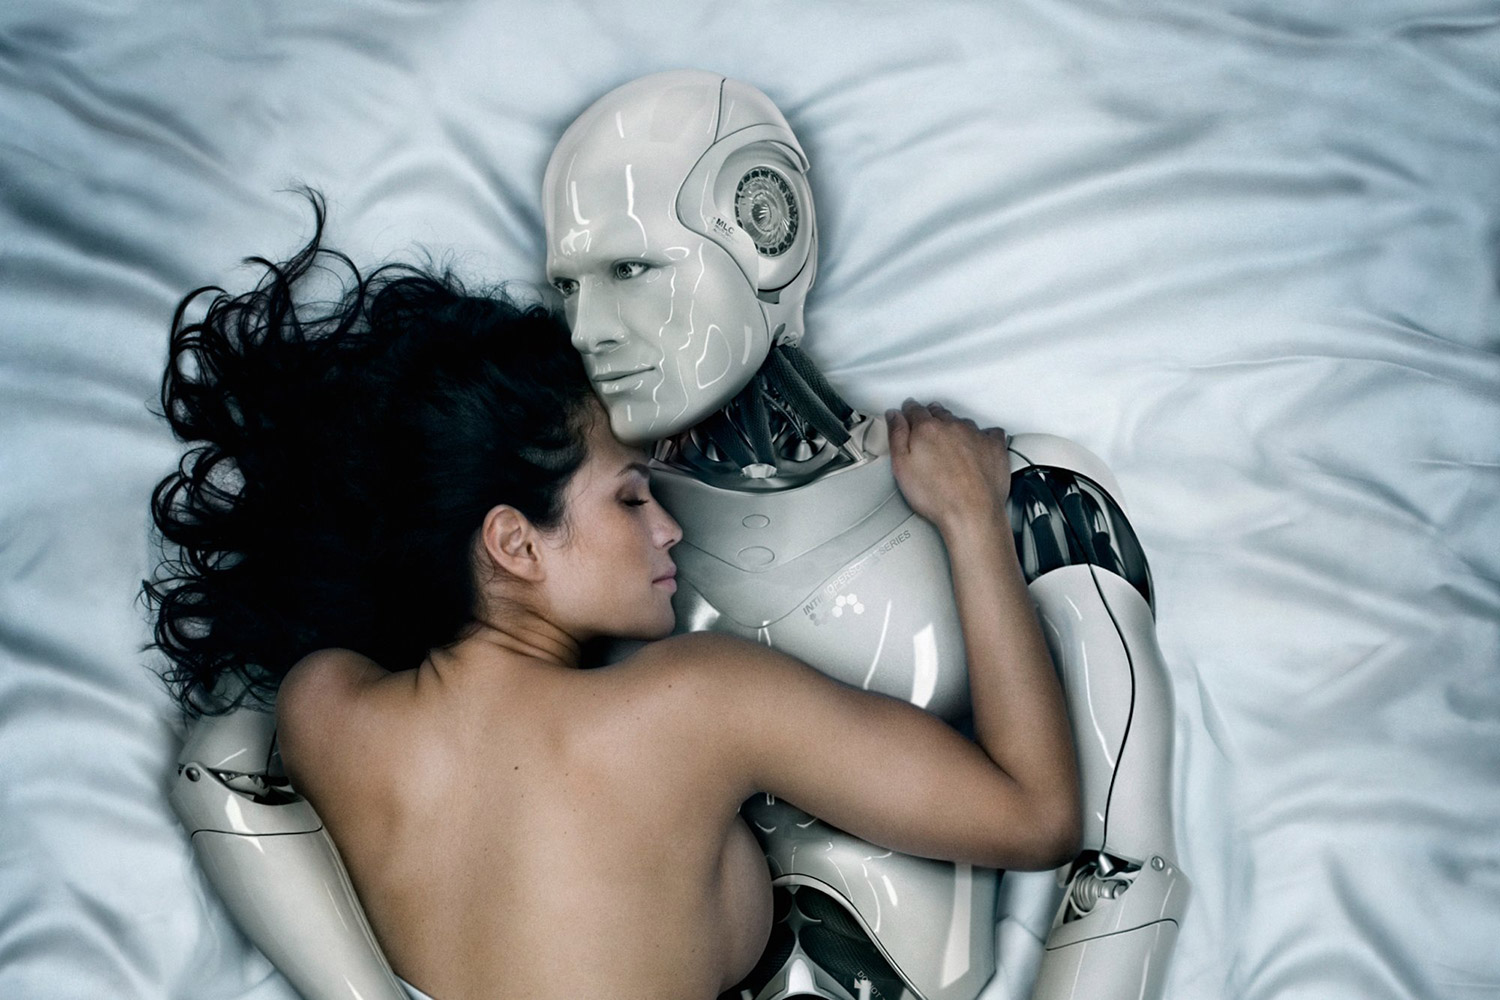 basak yalcin add having sex with a robot porn photo